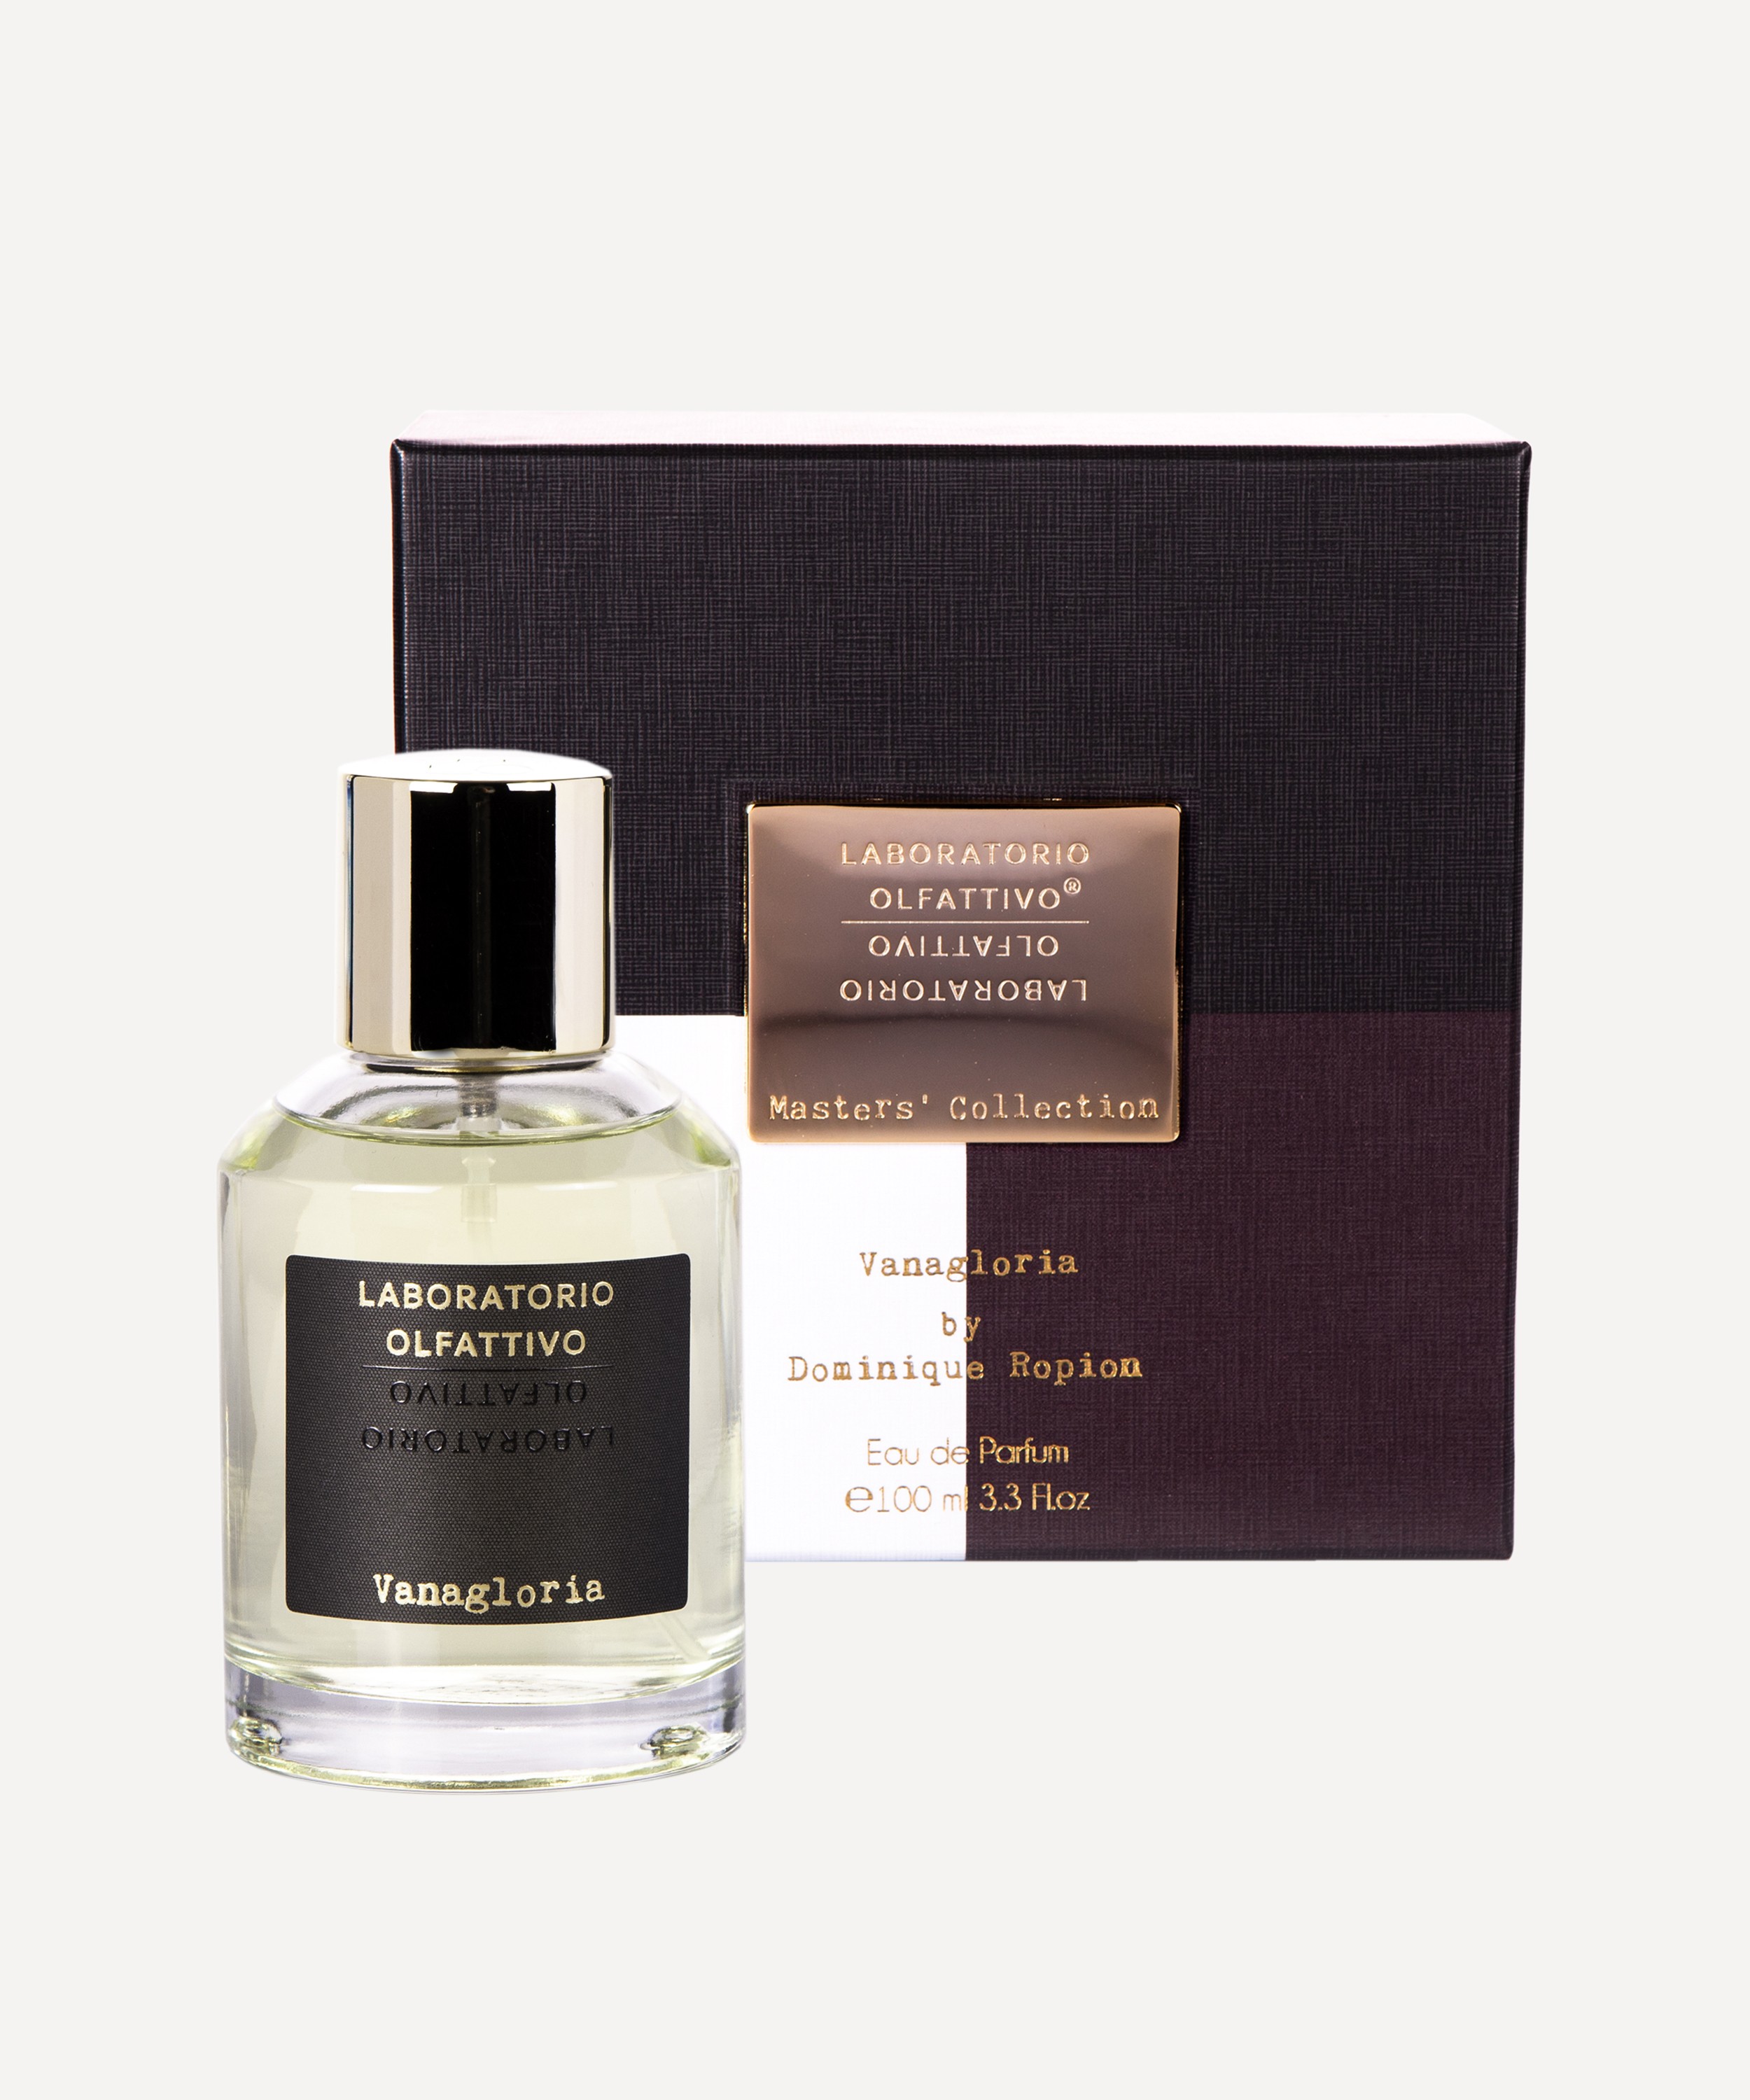 Laboratorio Olfattivo Vanagloria Eau de Parfum 100ml | Liberty